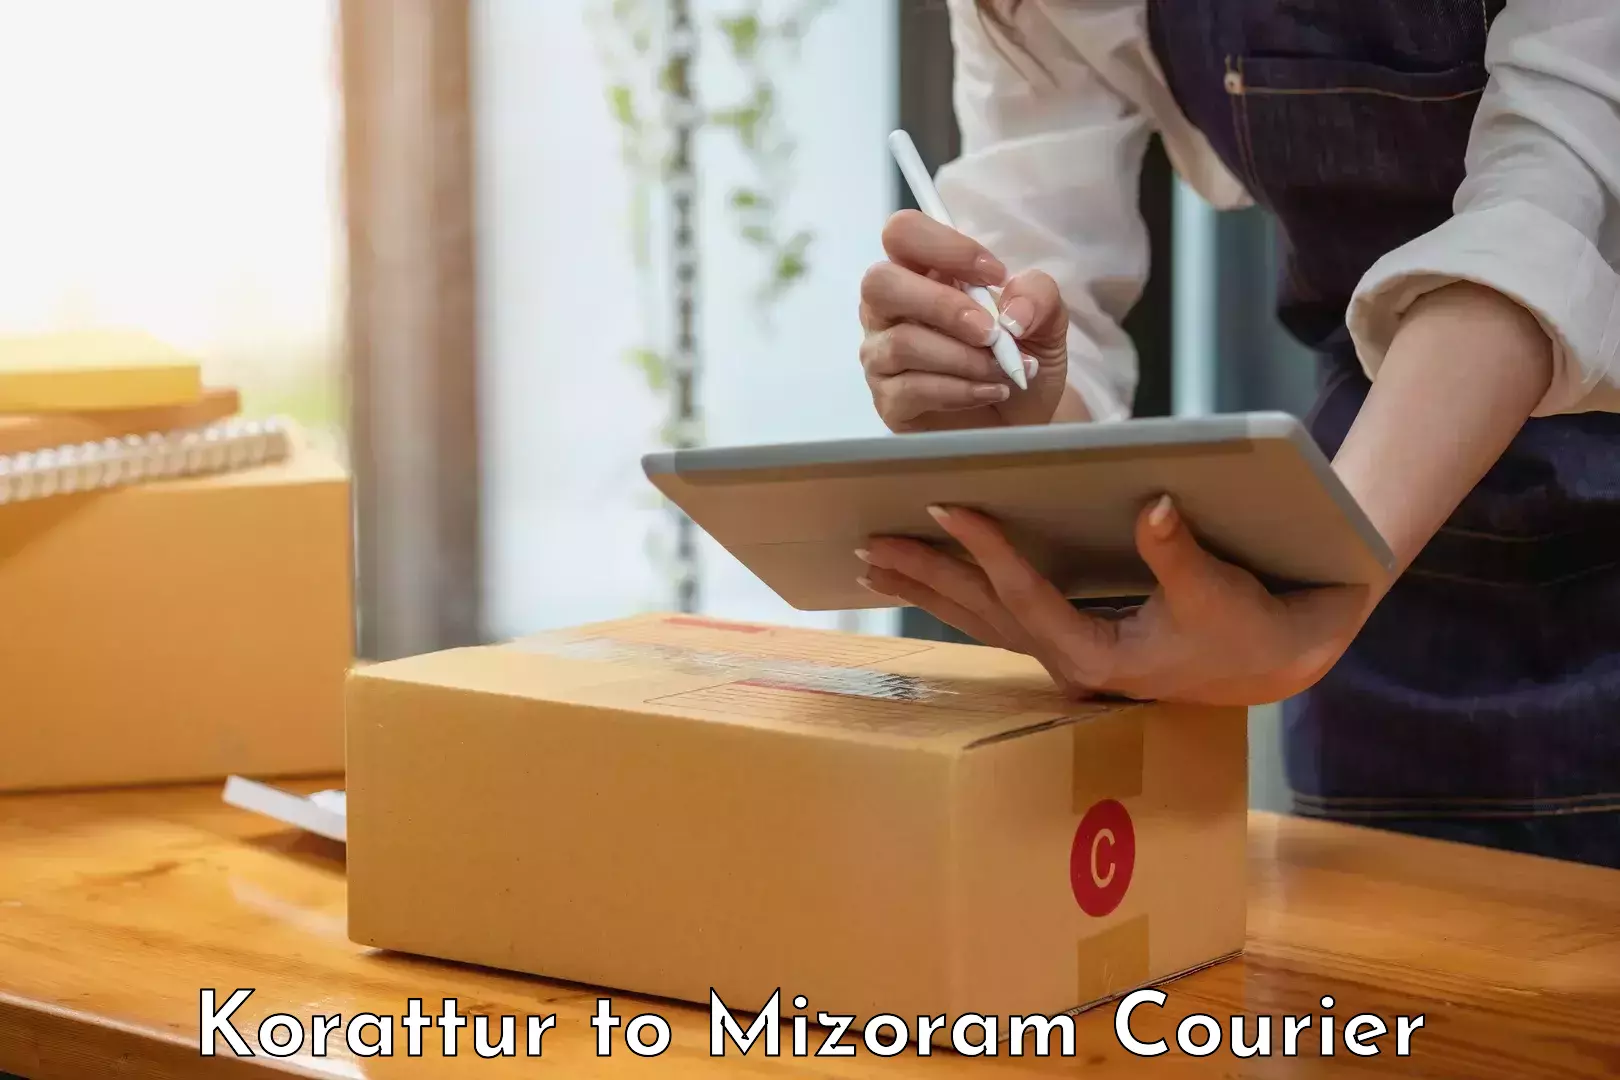 Advanced delivery network Korattur to Mizoram